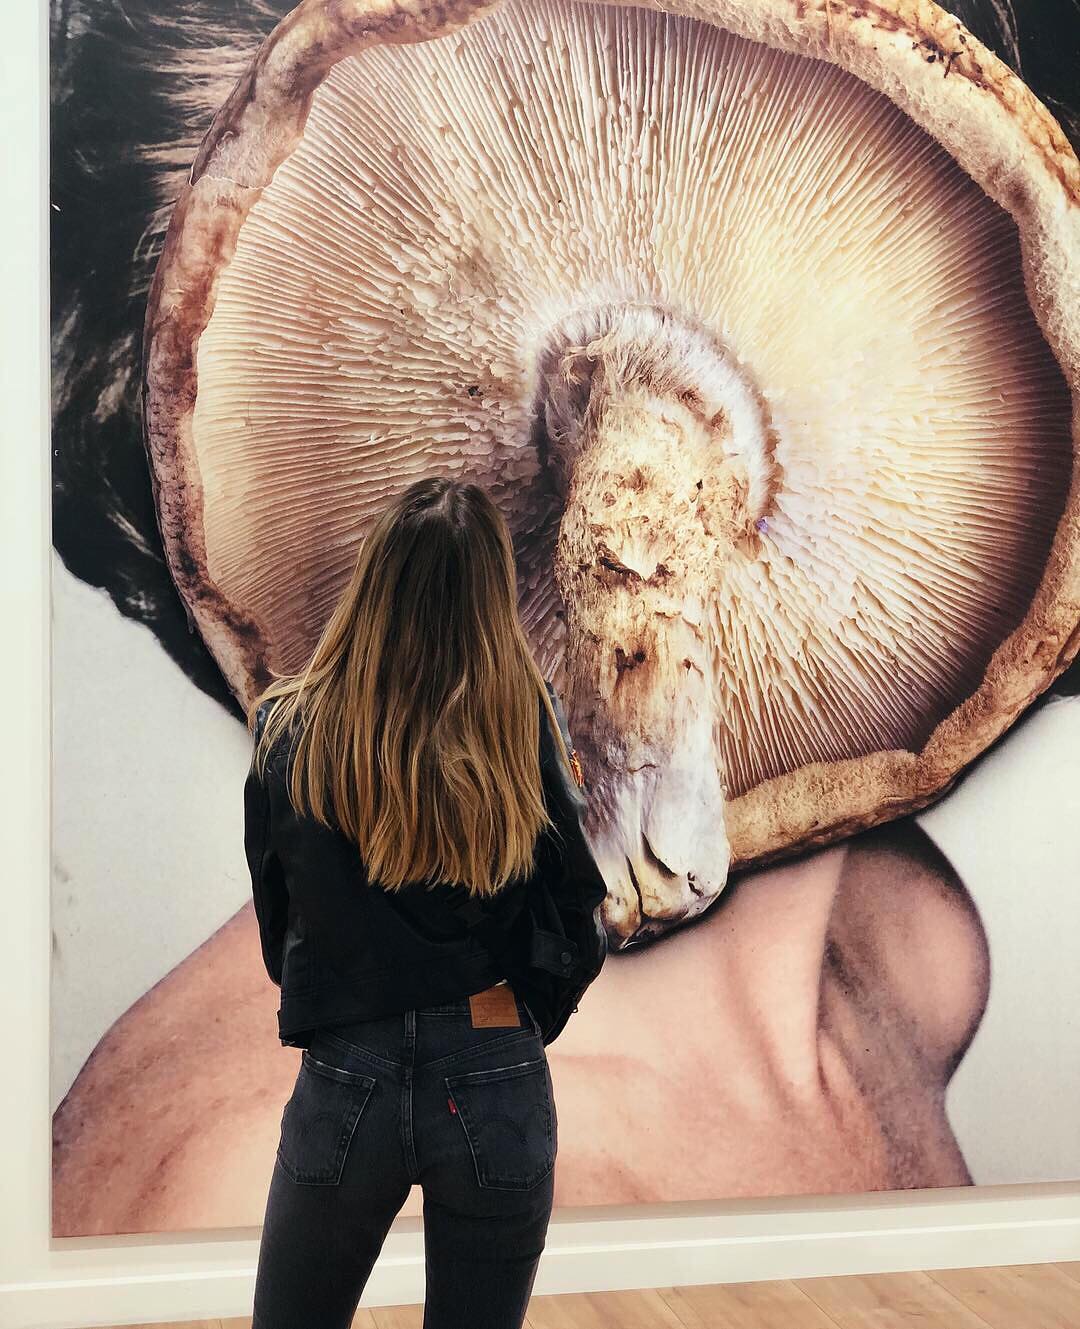 Woman in black looking at mushroom picture at Art Basel in Miami, FL. Photo by Instagram user @seymasubasi